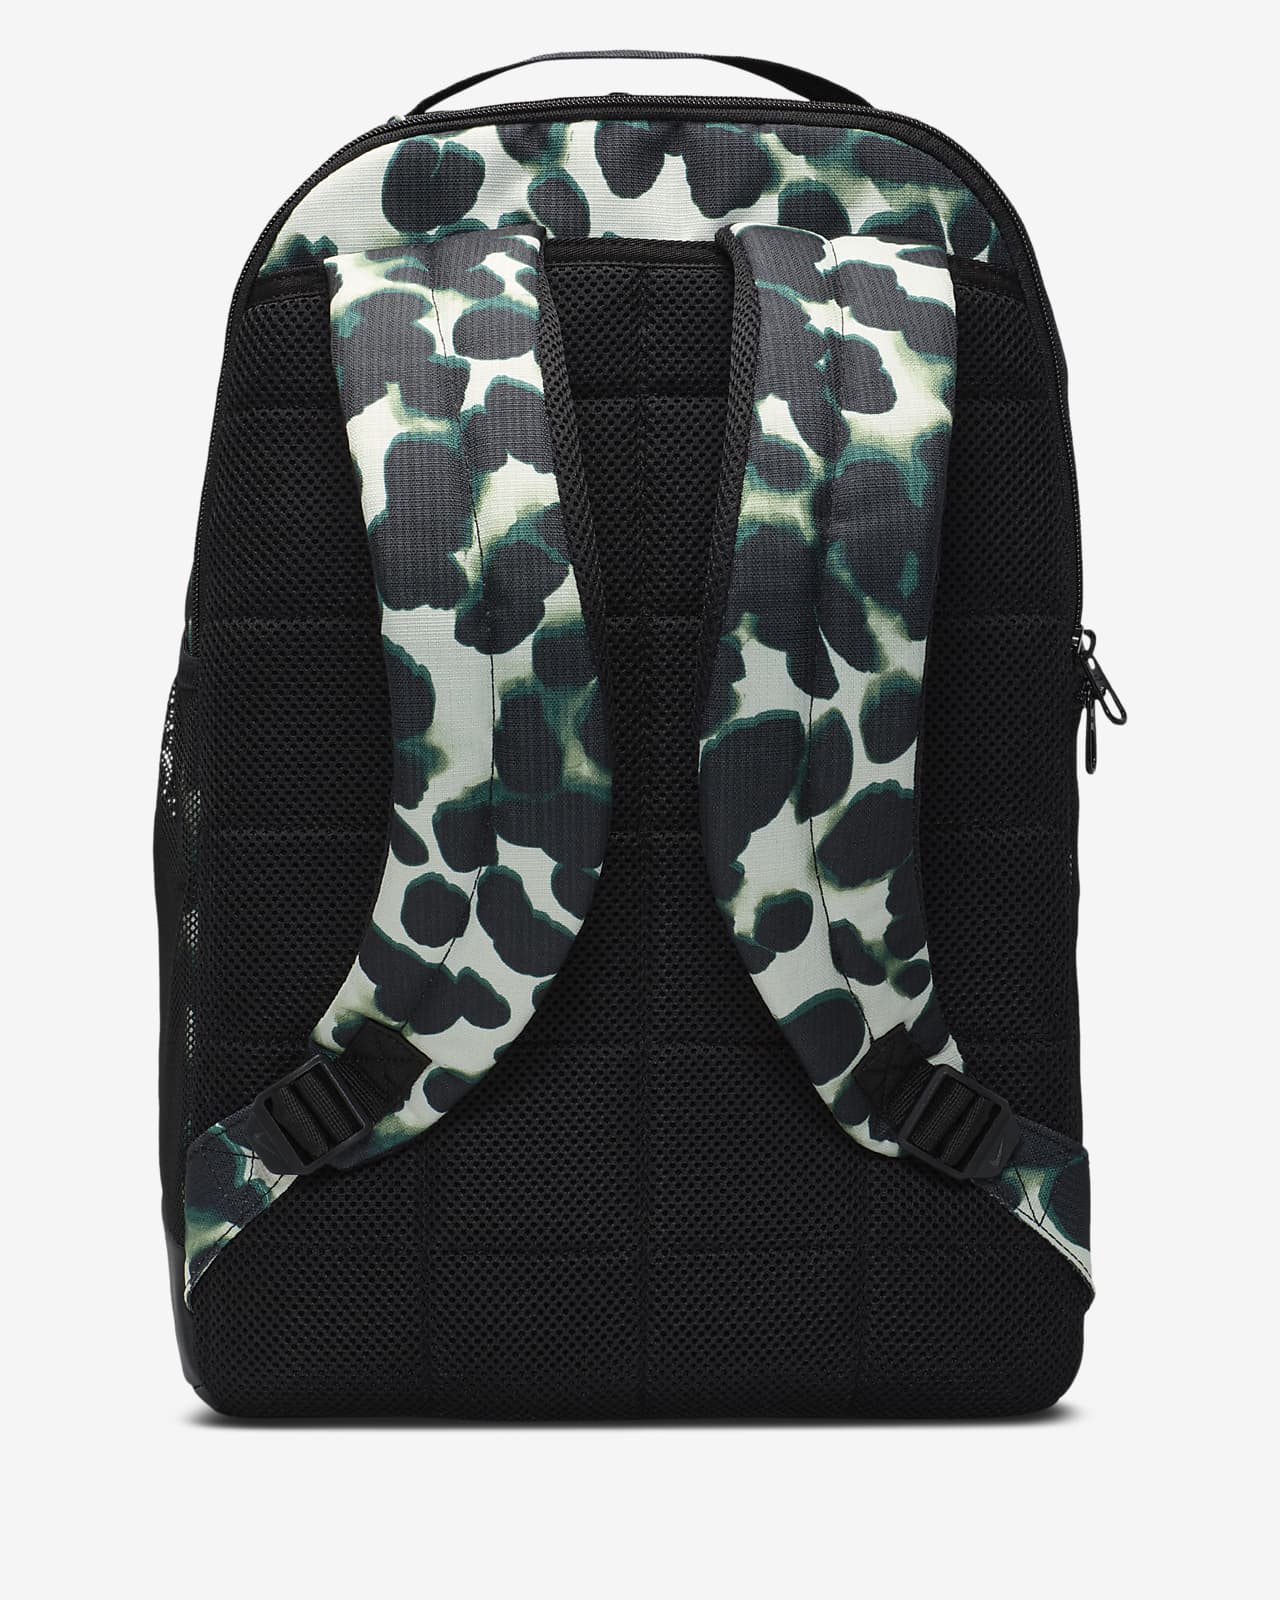 Nike Brasilia Backpack (Medium, 24L)